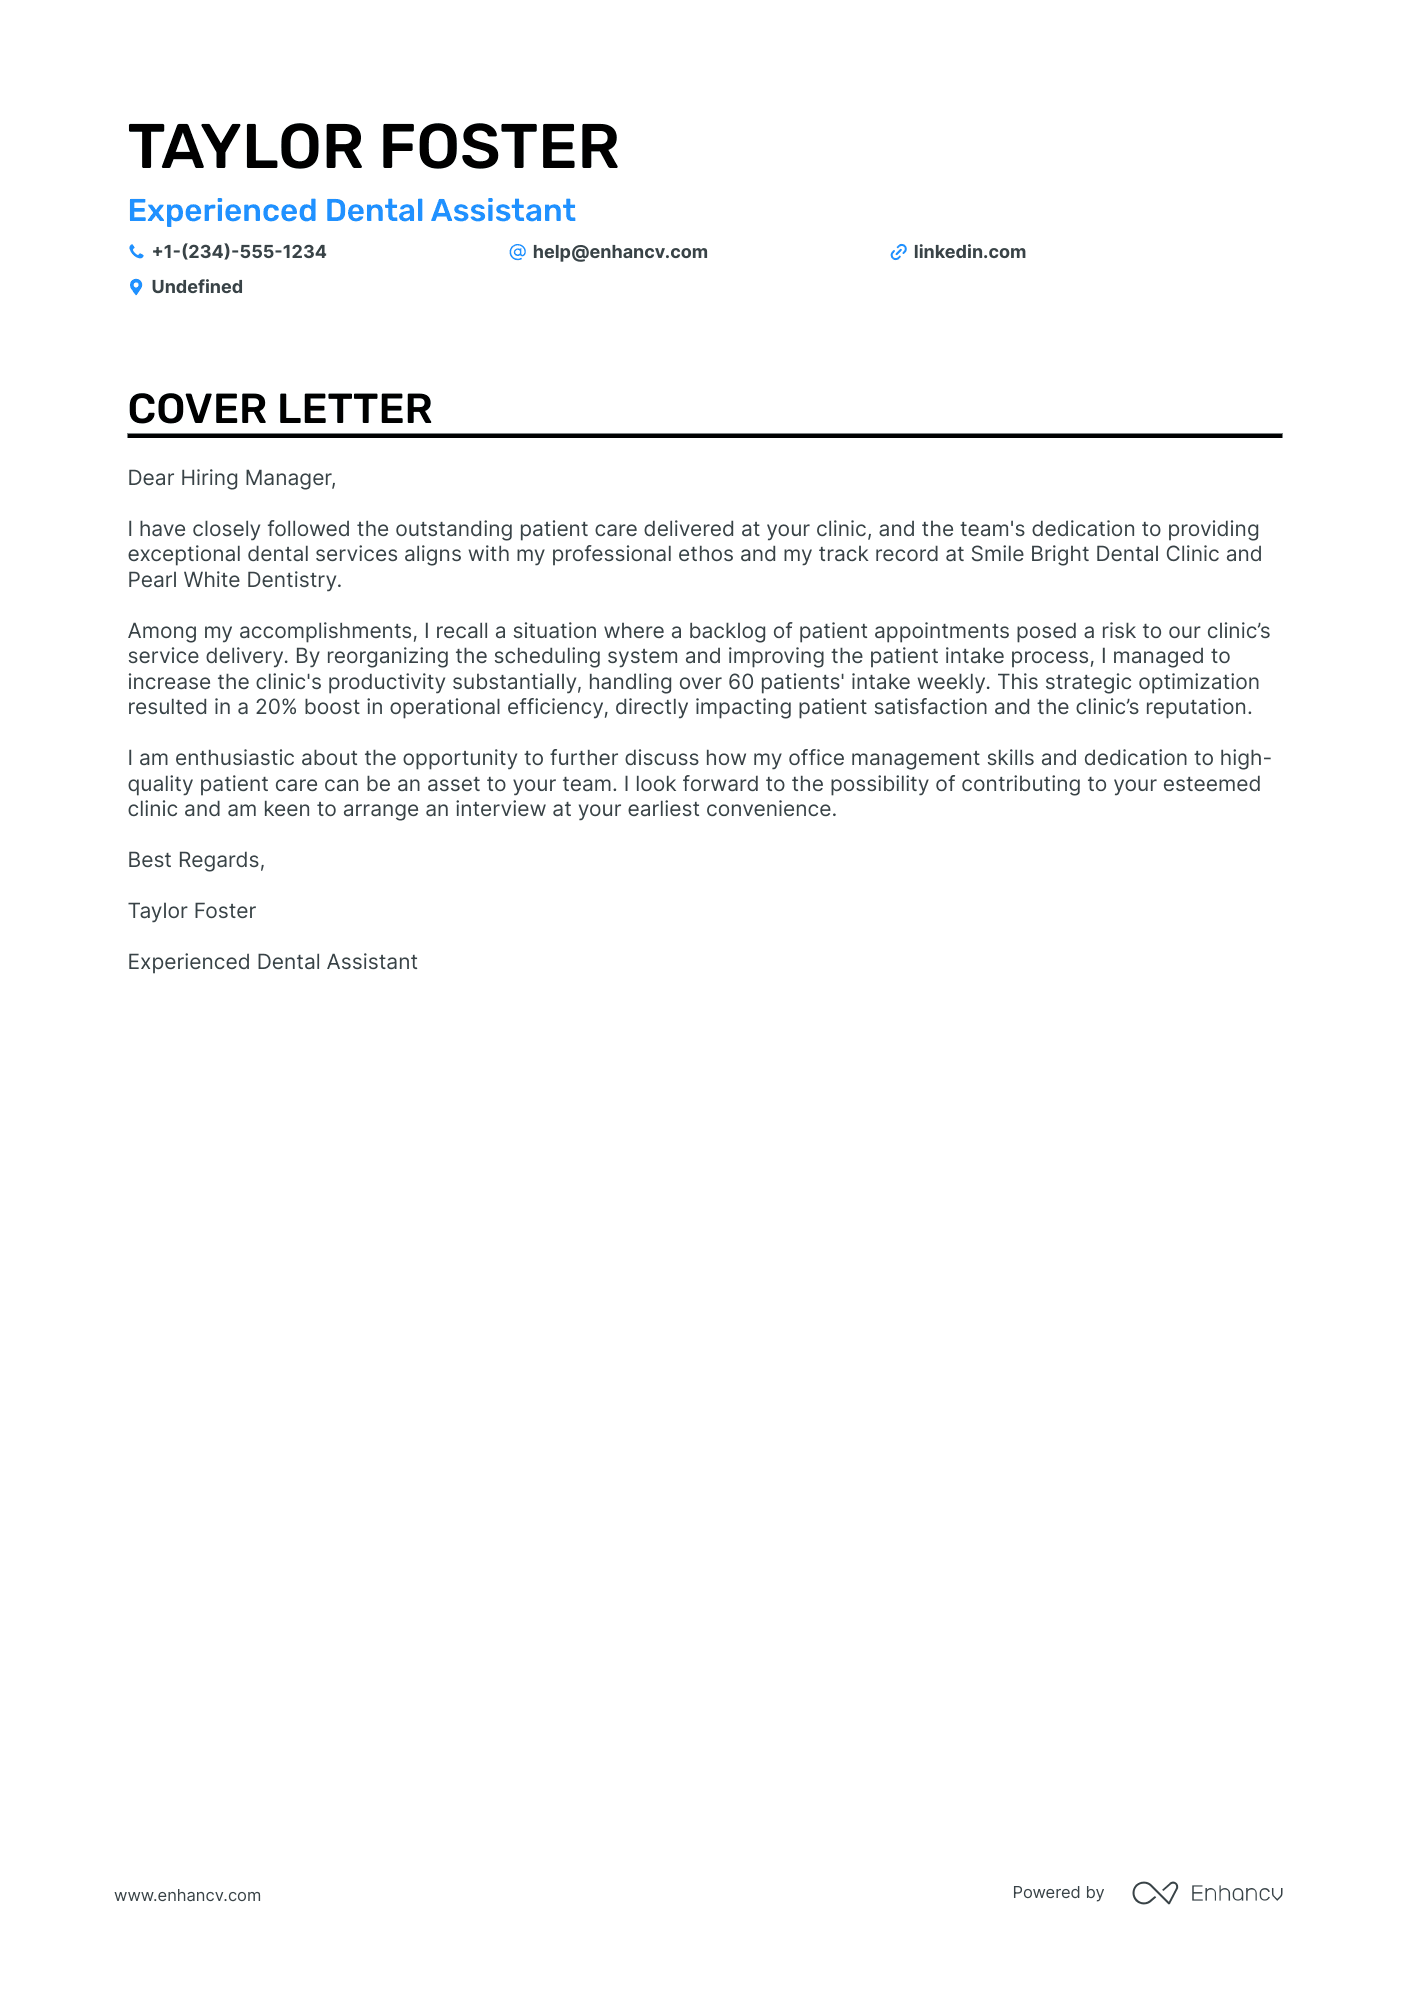 cover letter for a dental assistant